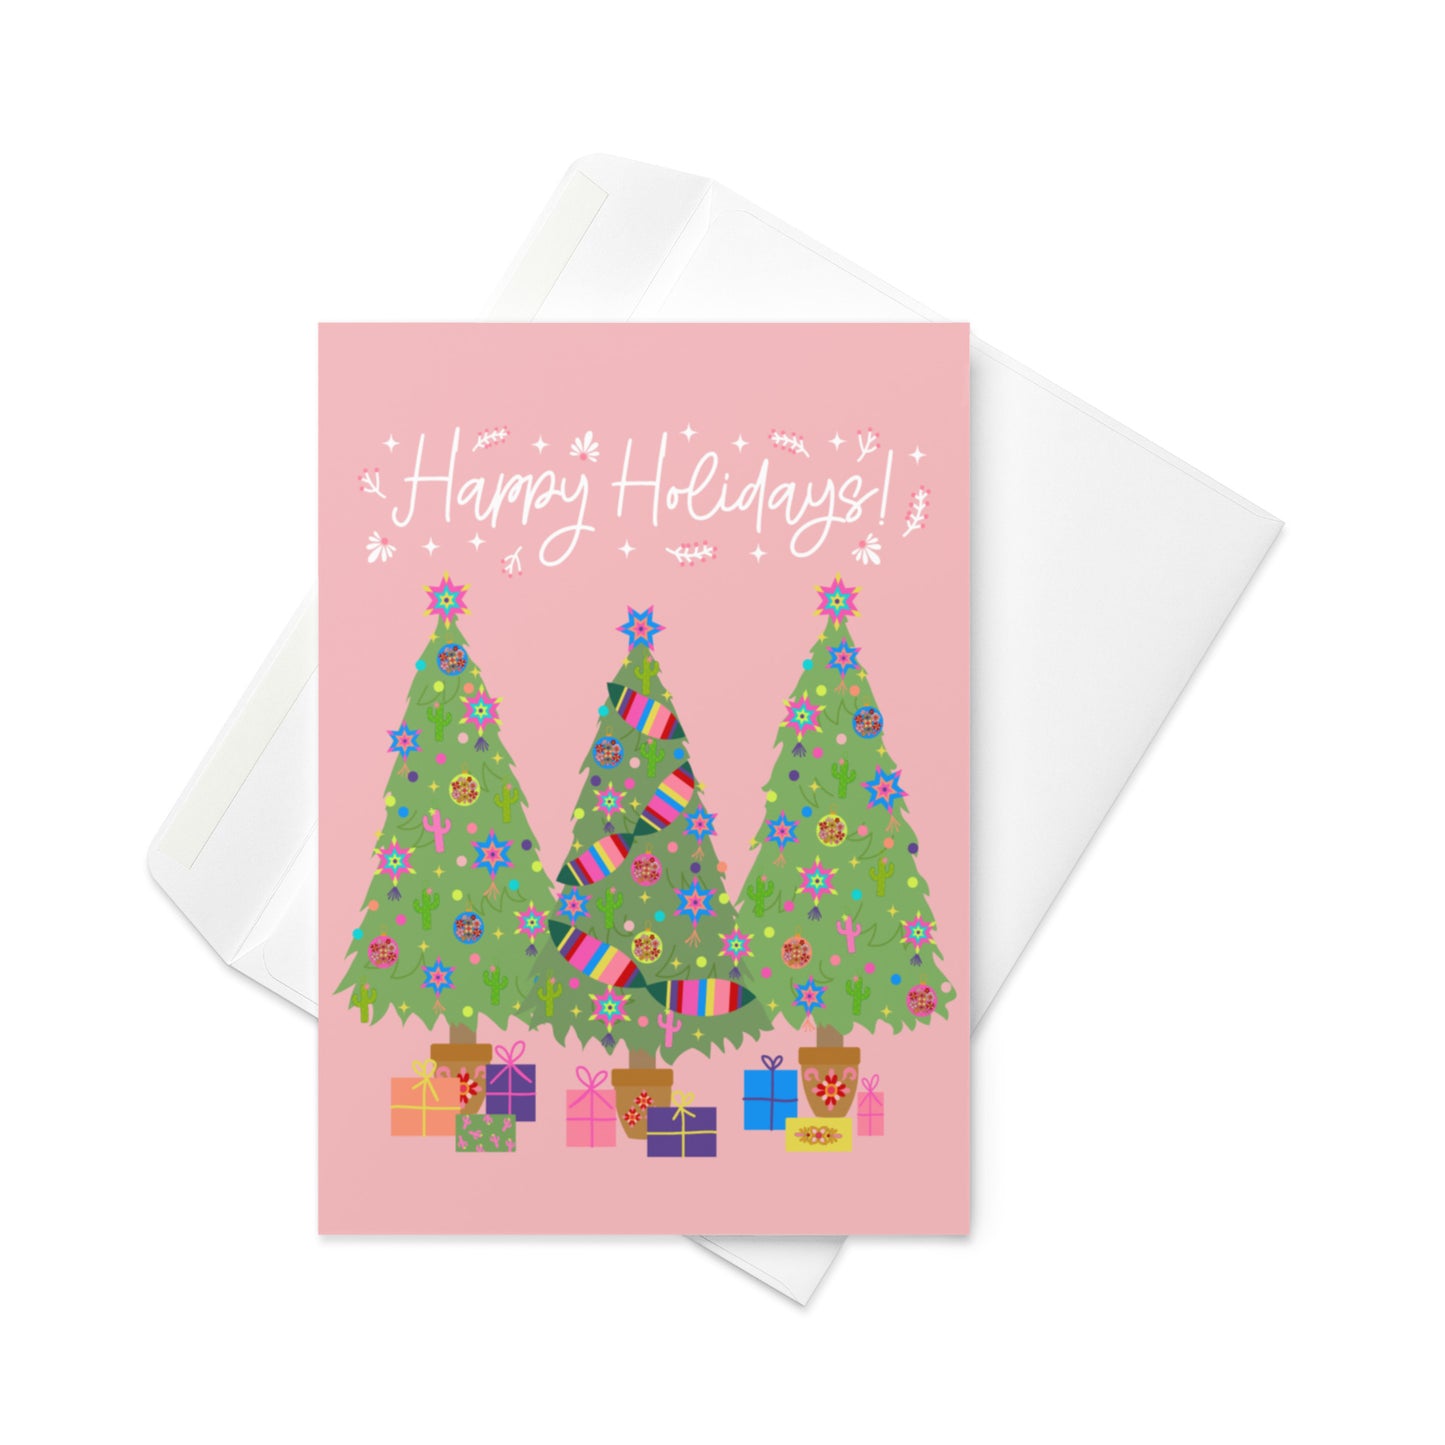 Happy Holidays Greeting card